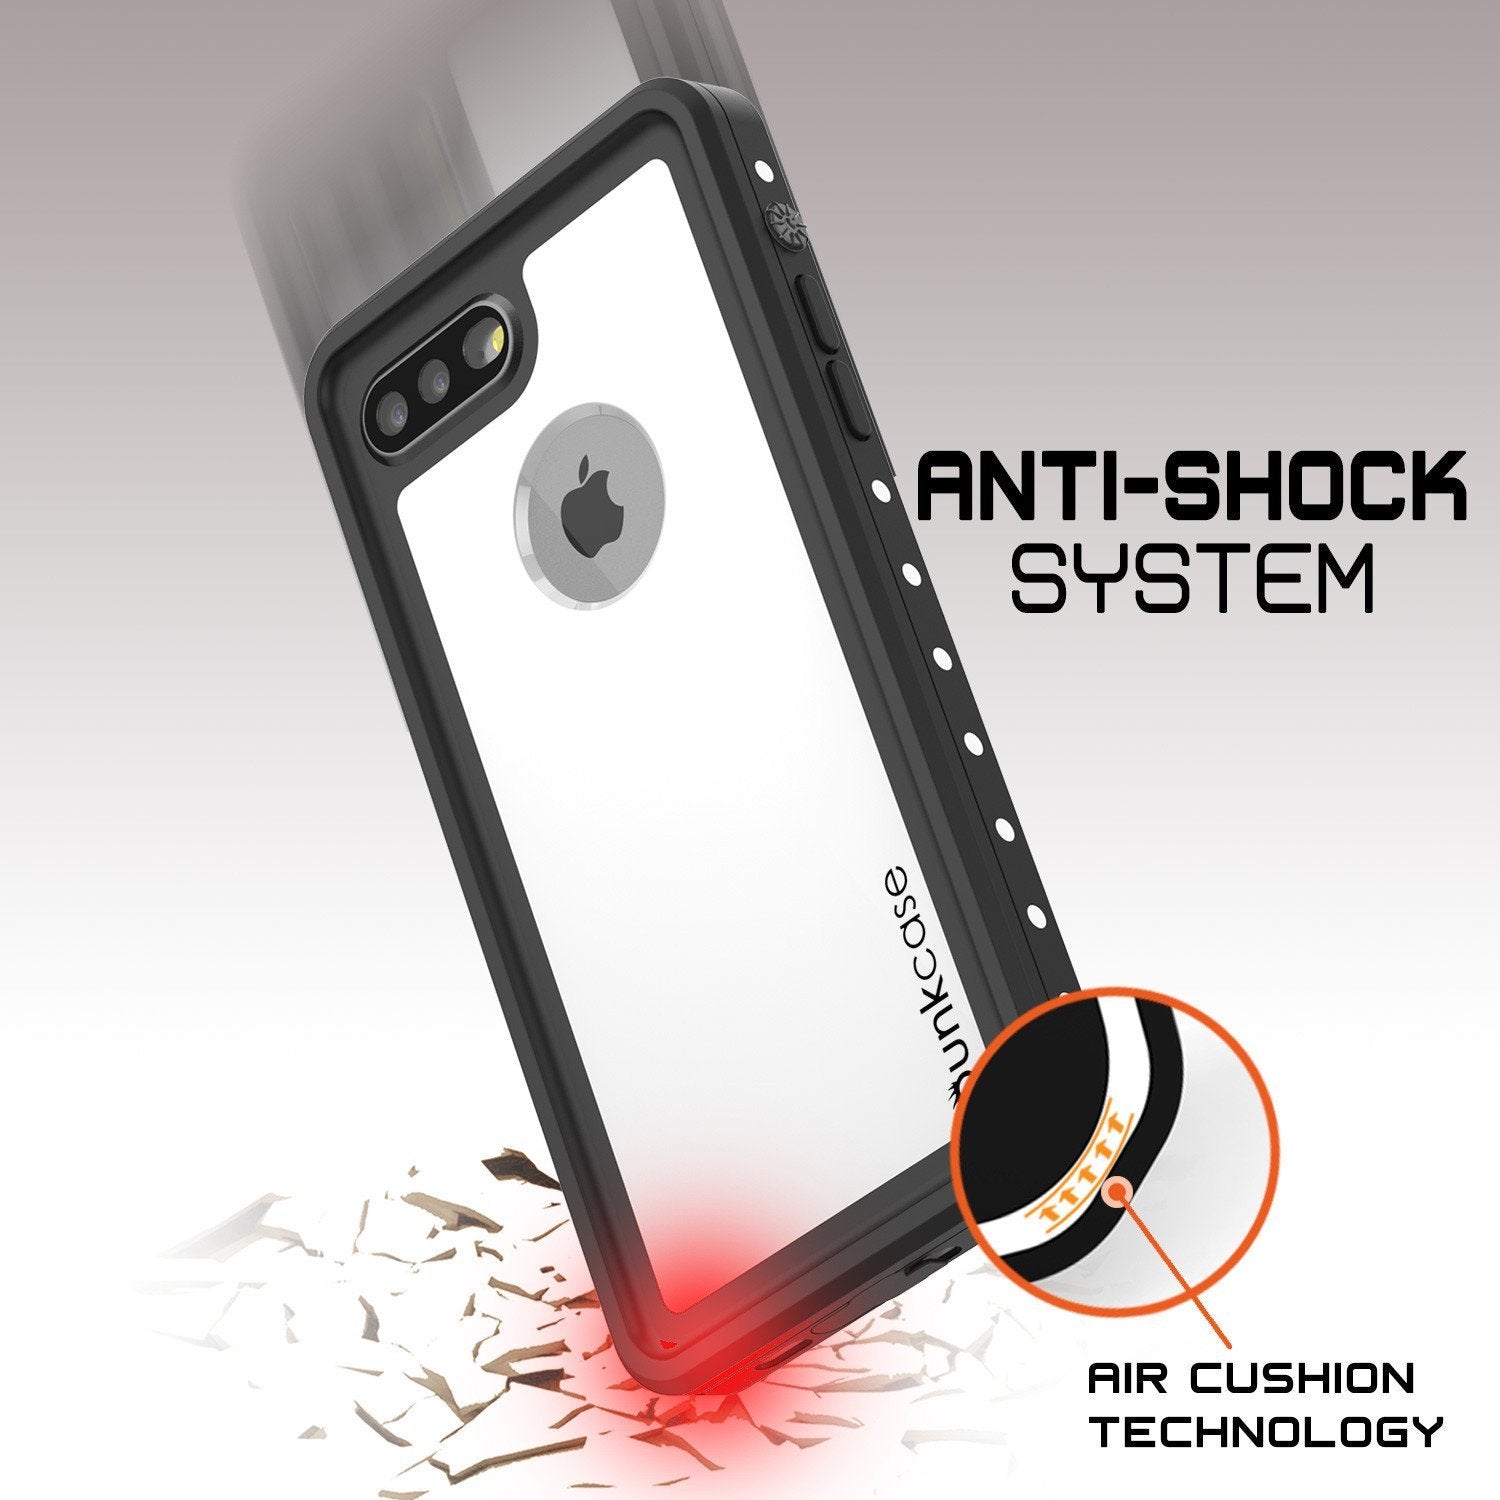 iPhone 8+ Plus Waterproof Case, Punkcase [StudStar Series] [White]